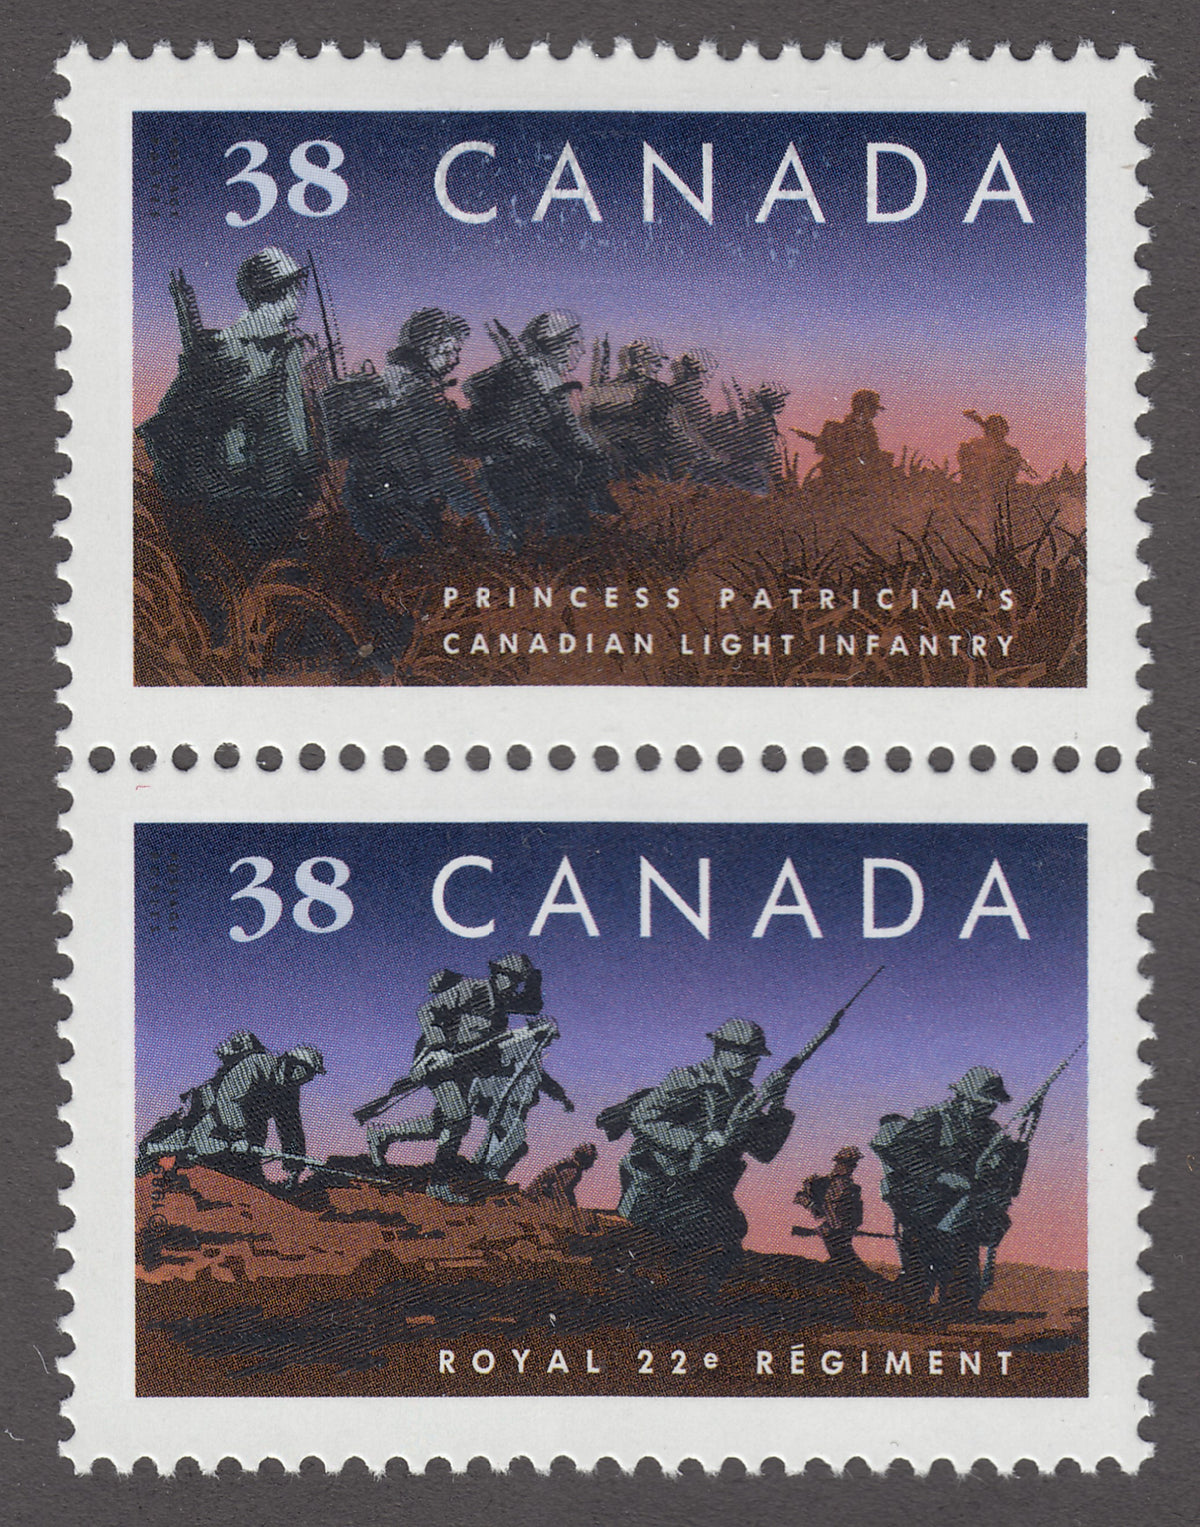 1249CA1802 - Canada #1249, 1250 - Mint Pair, Printing Variety